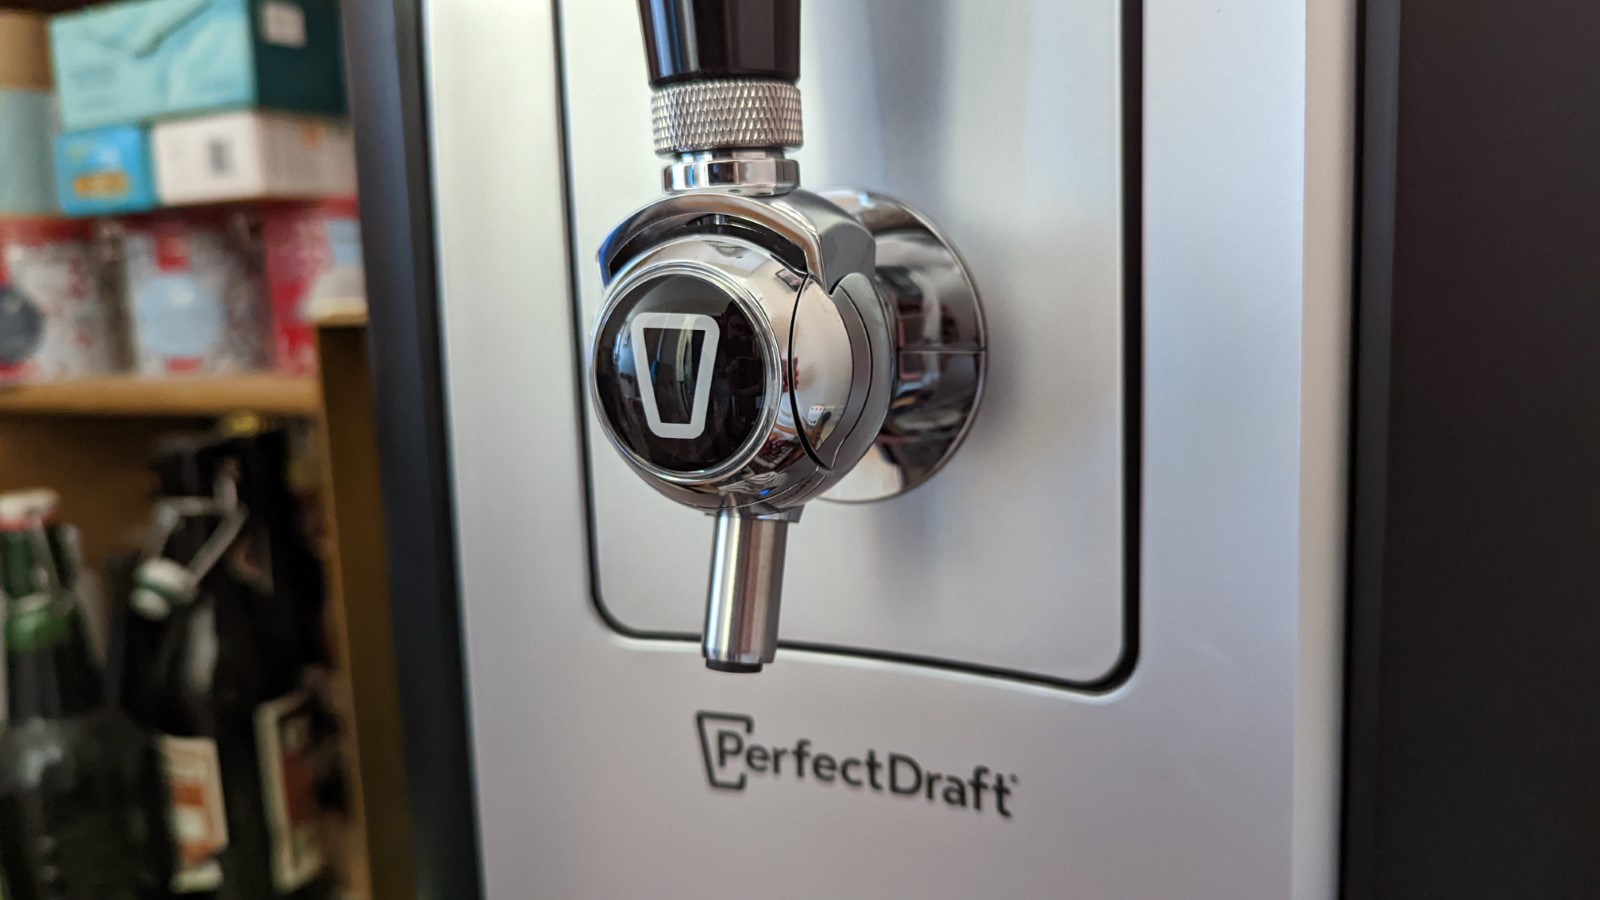 The PerfectDraft Pro tap